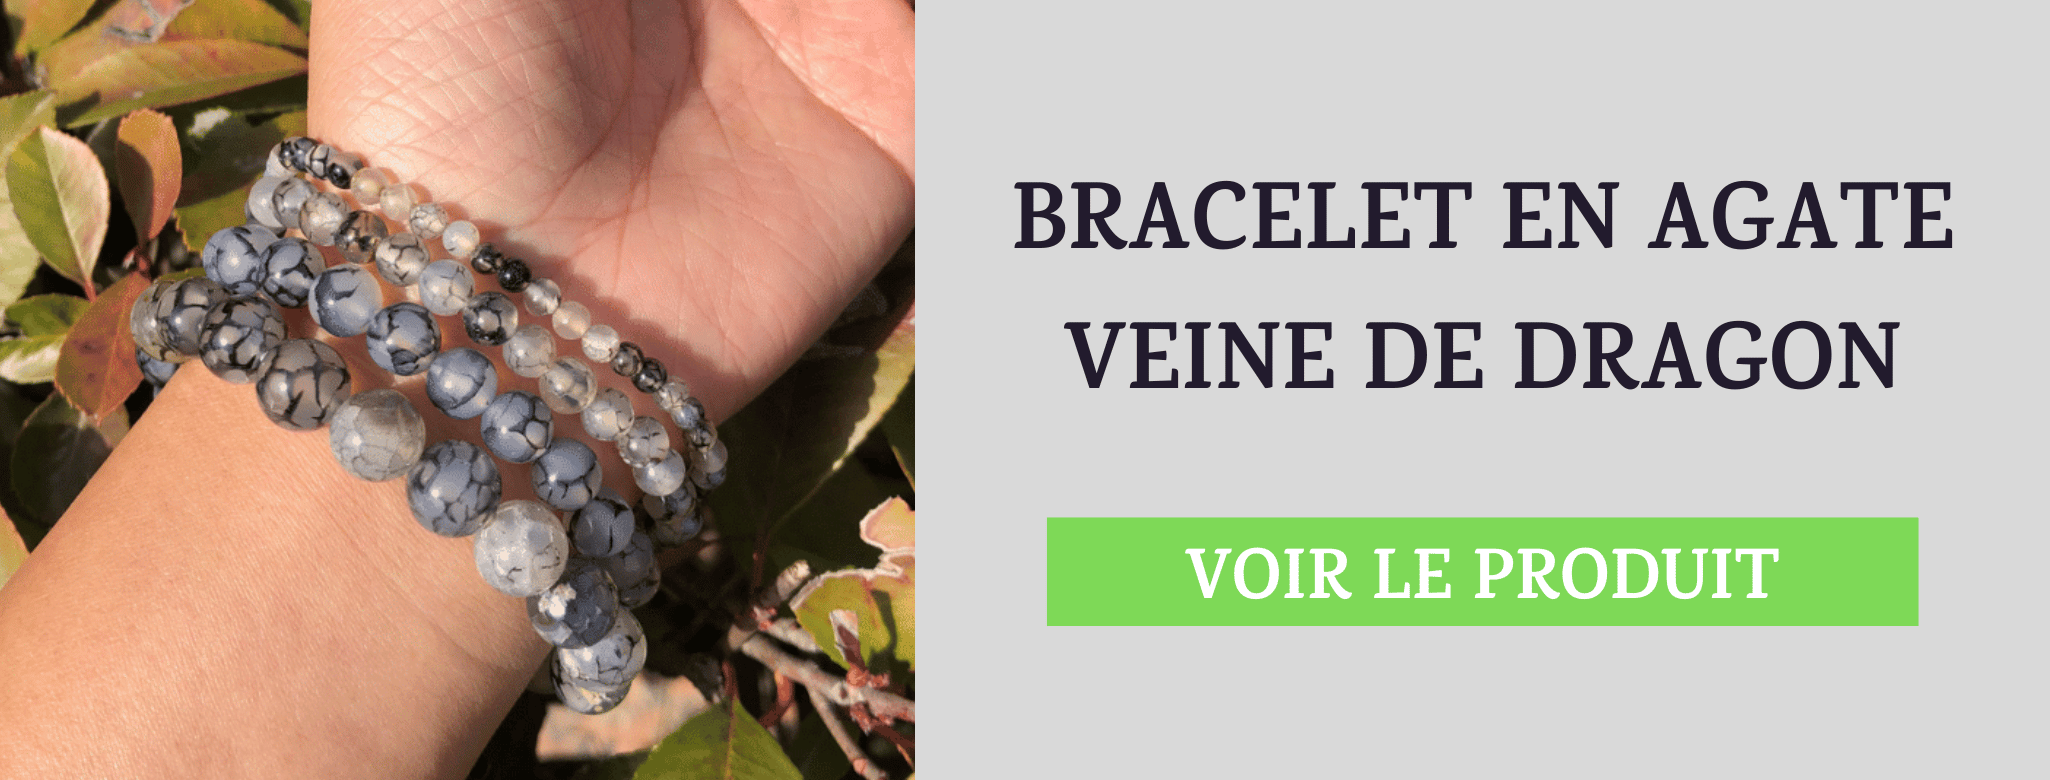 Bracelet Agate Veine de Dragon